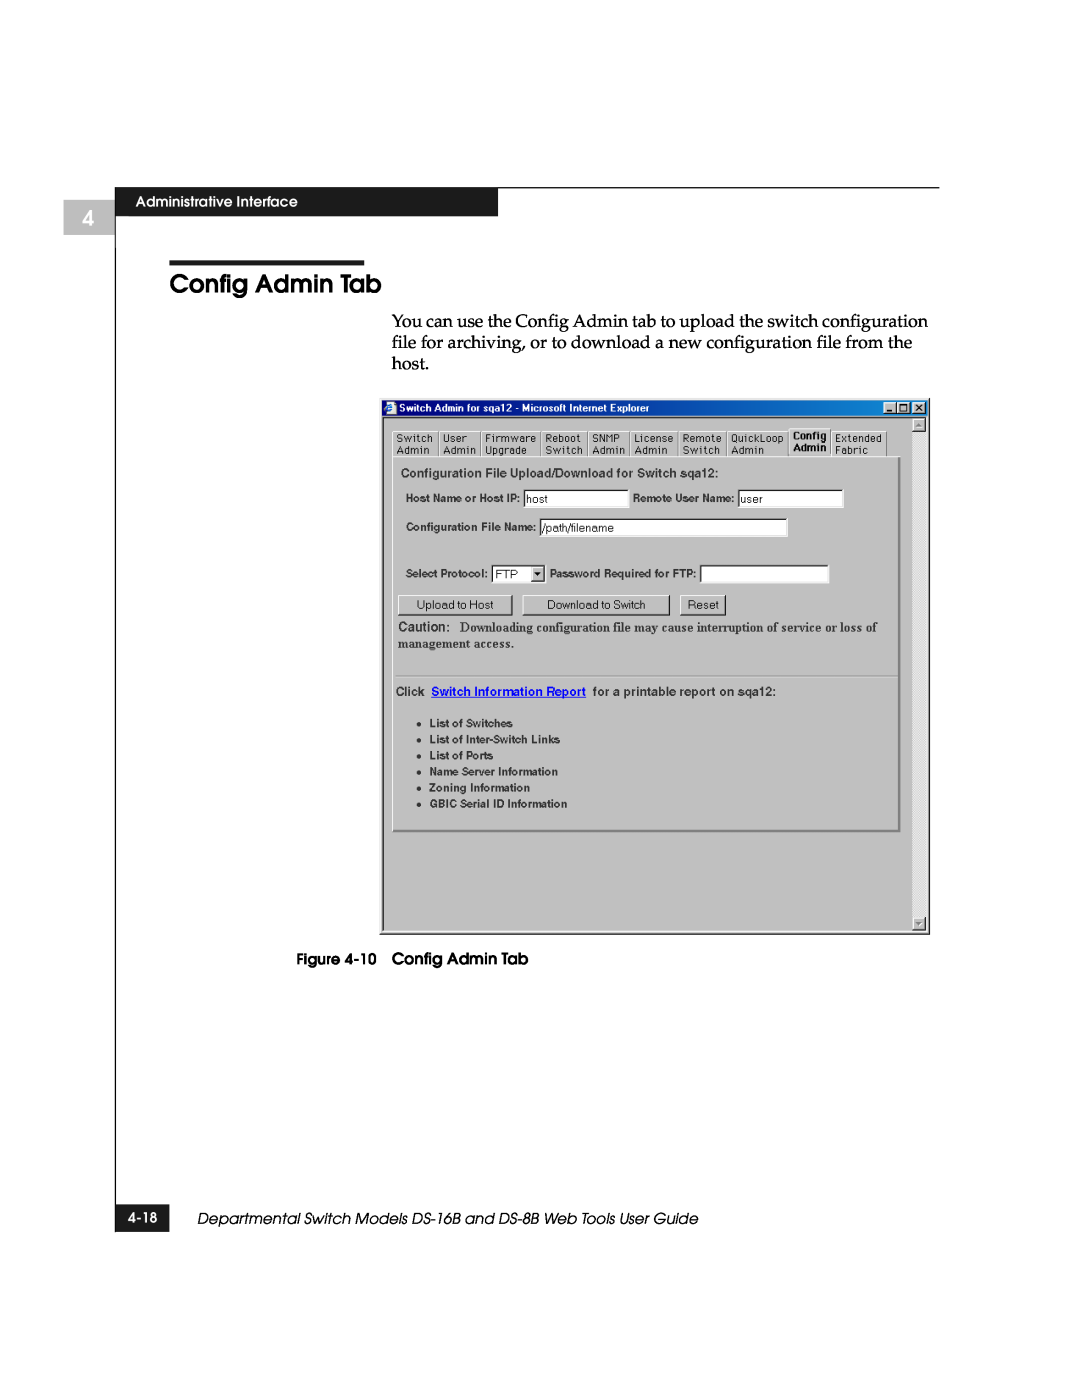 EMC DS-8B manual 10 Config Admin Tab, Administrative Interface, 4-18 